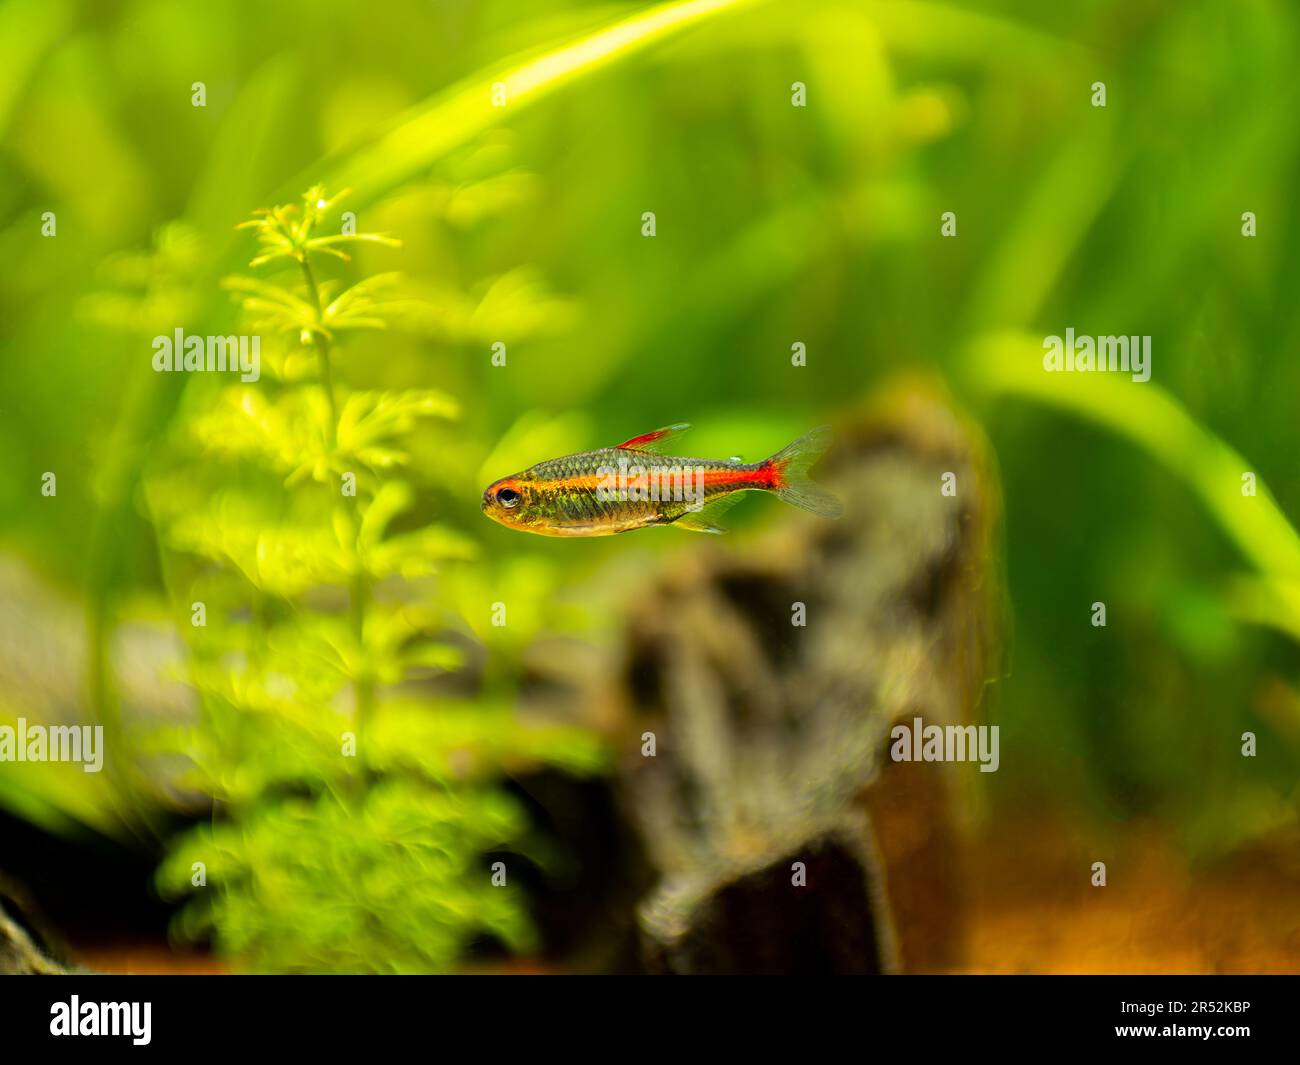 tetra growlight (Hemigrammus Erythrozonus) isolated in a fish tank with blurred background Stock Photo